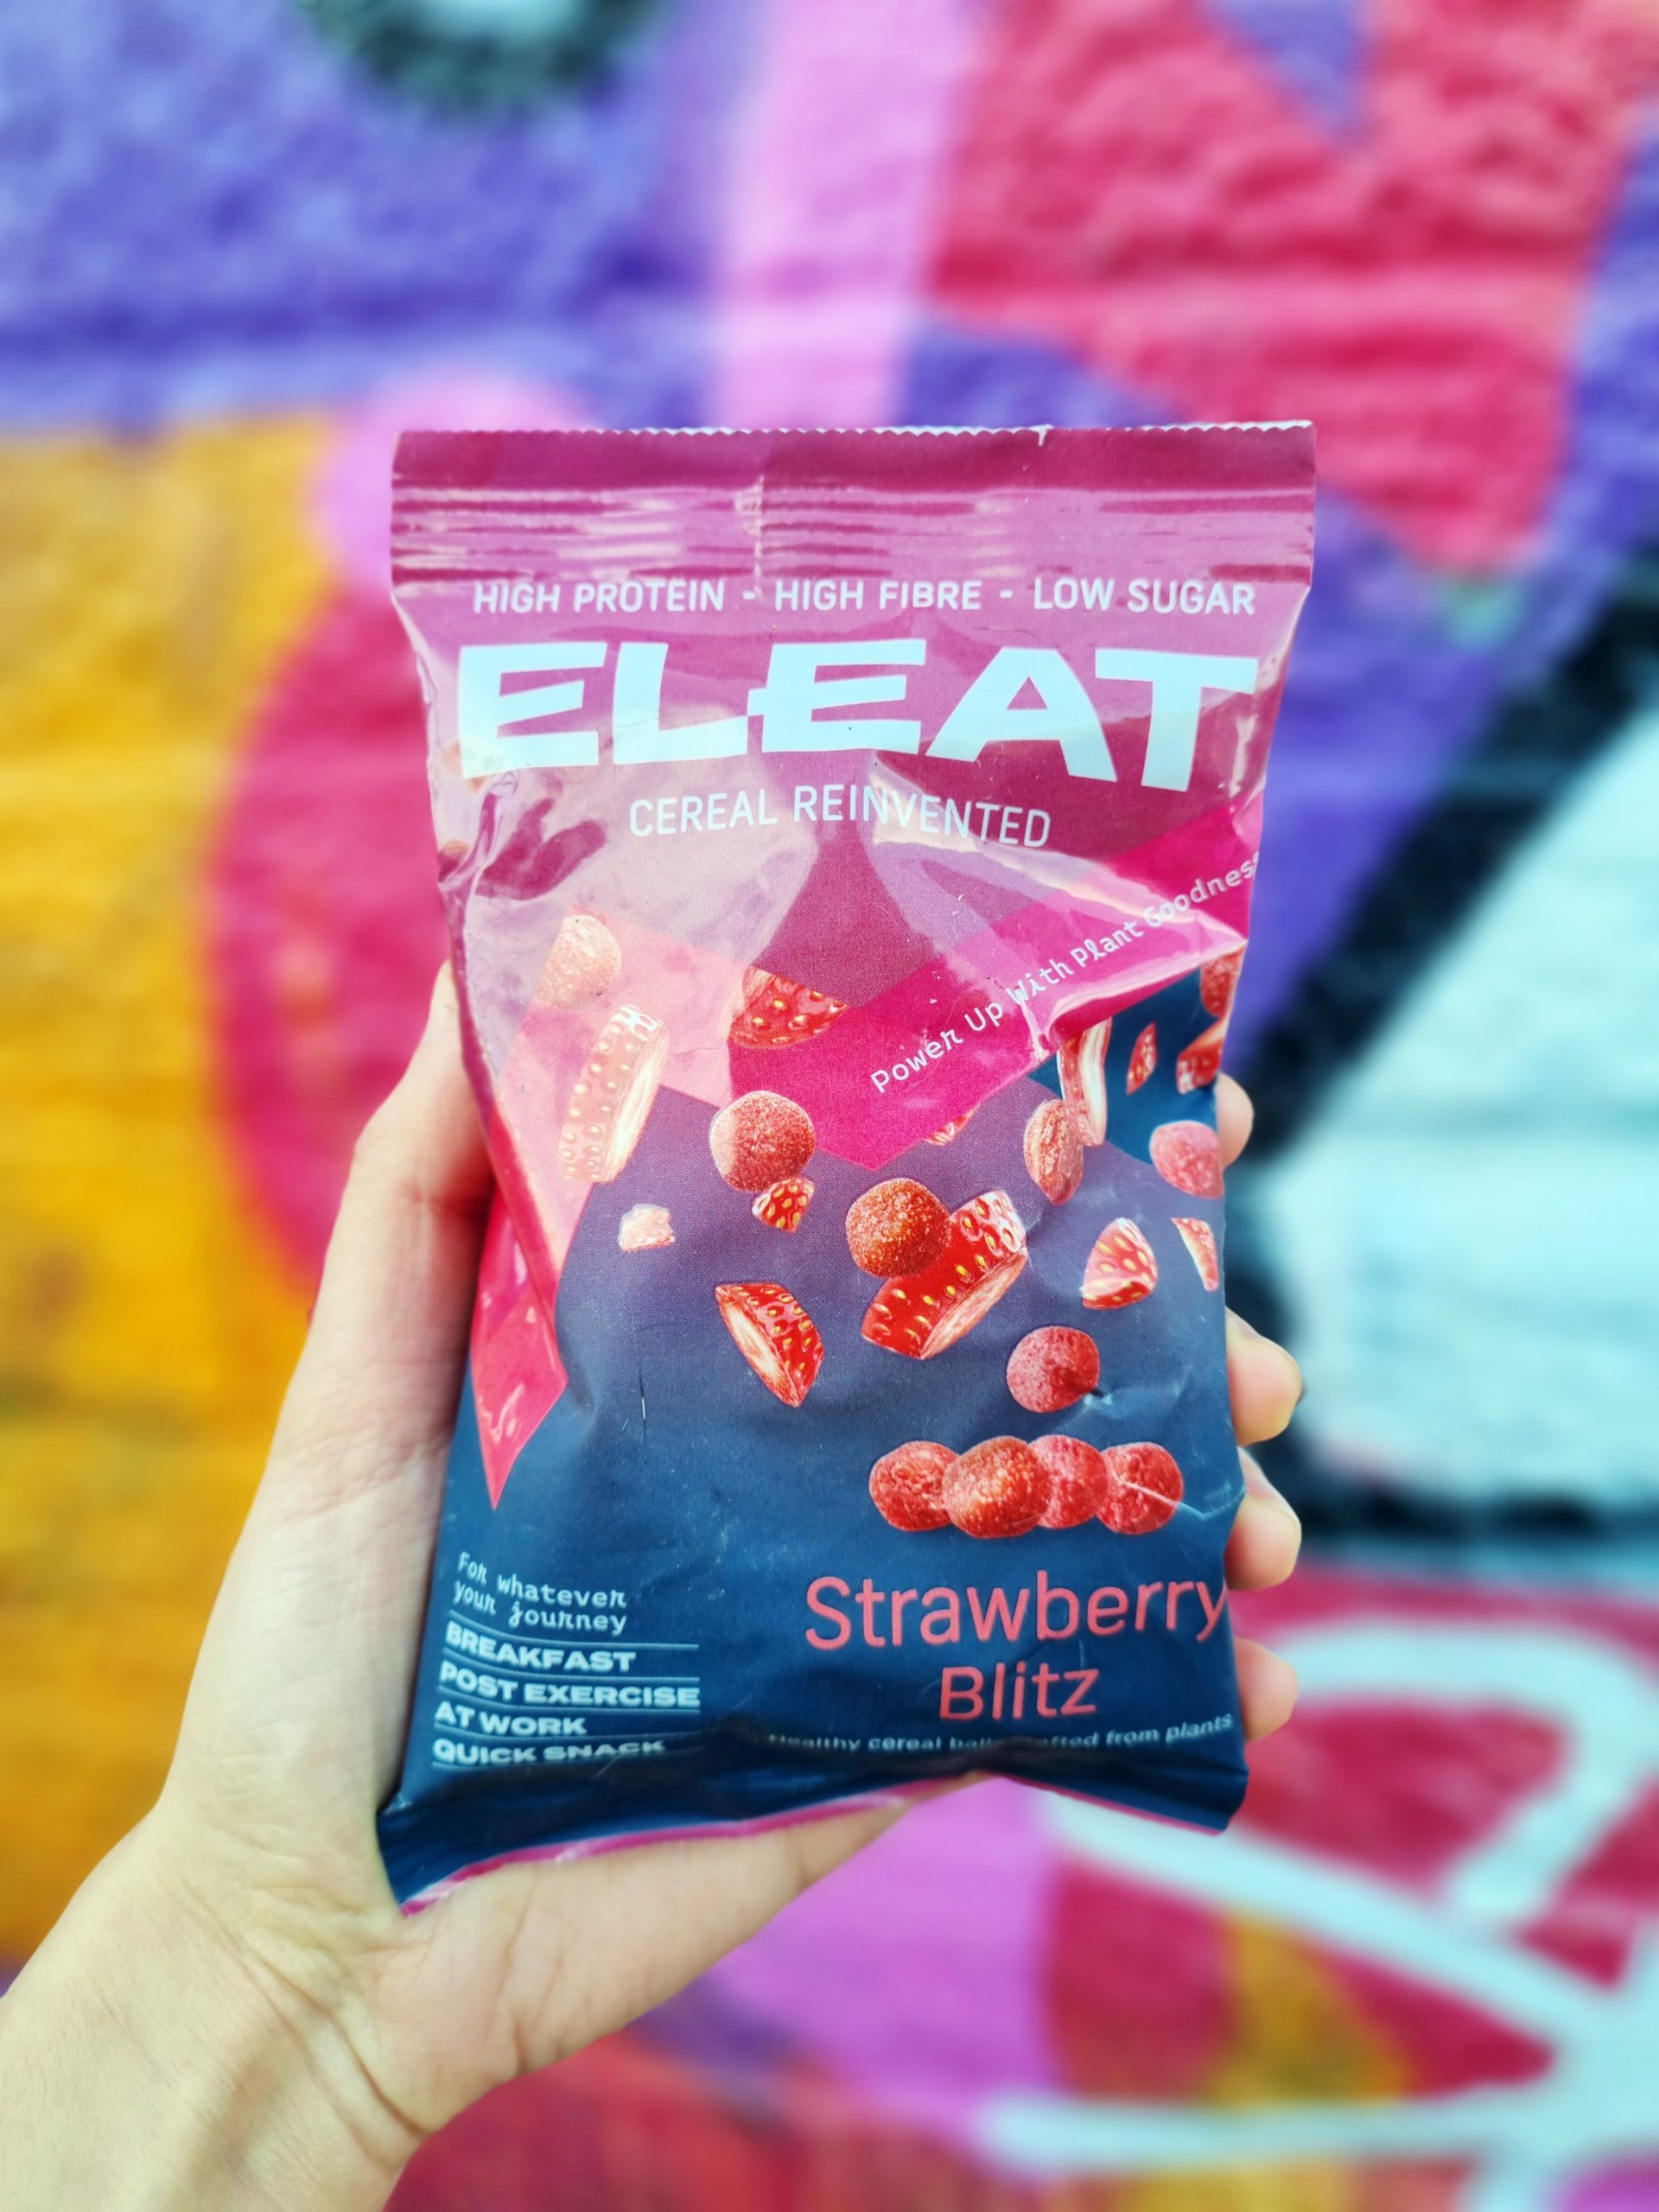 <img src="eleat.jpg" alt="teleat strawberry bliss cereal"/> 